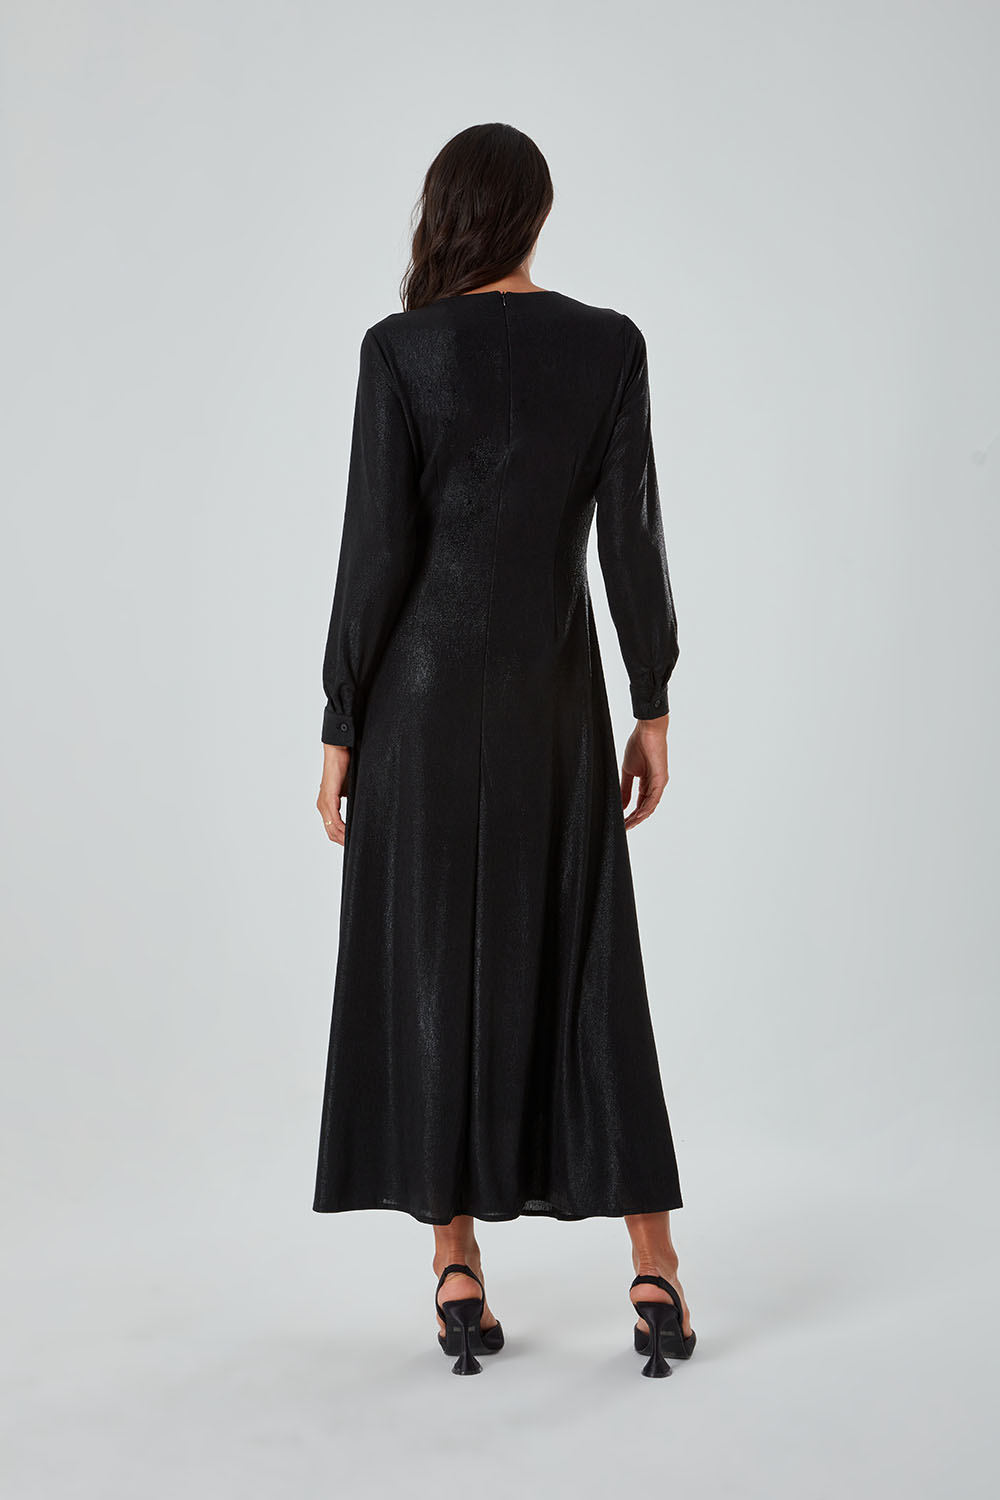 Black Dress With Drawstring Waist